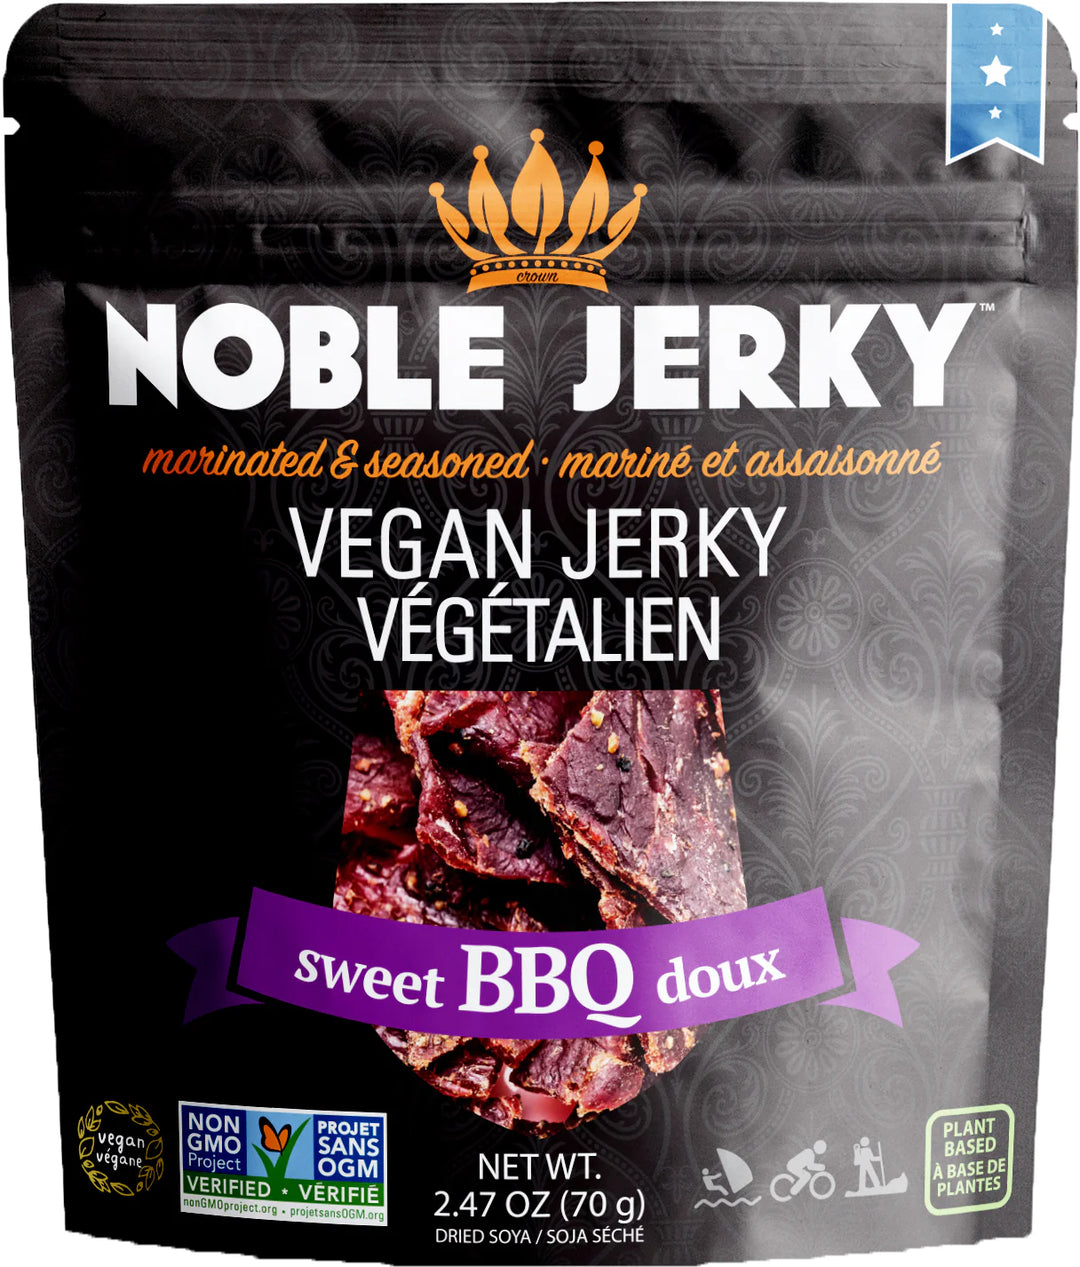 BBQ Vegan Jerky by Urbani